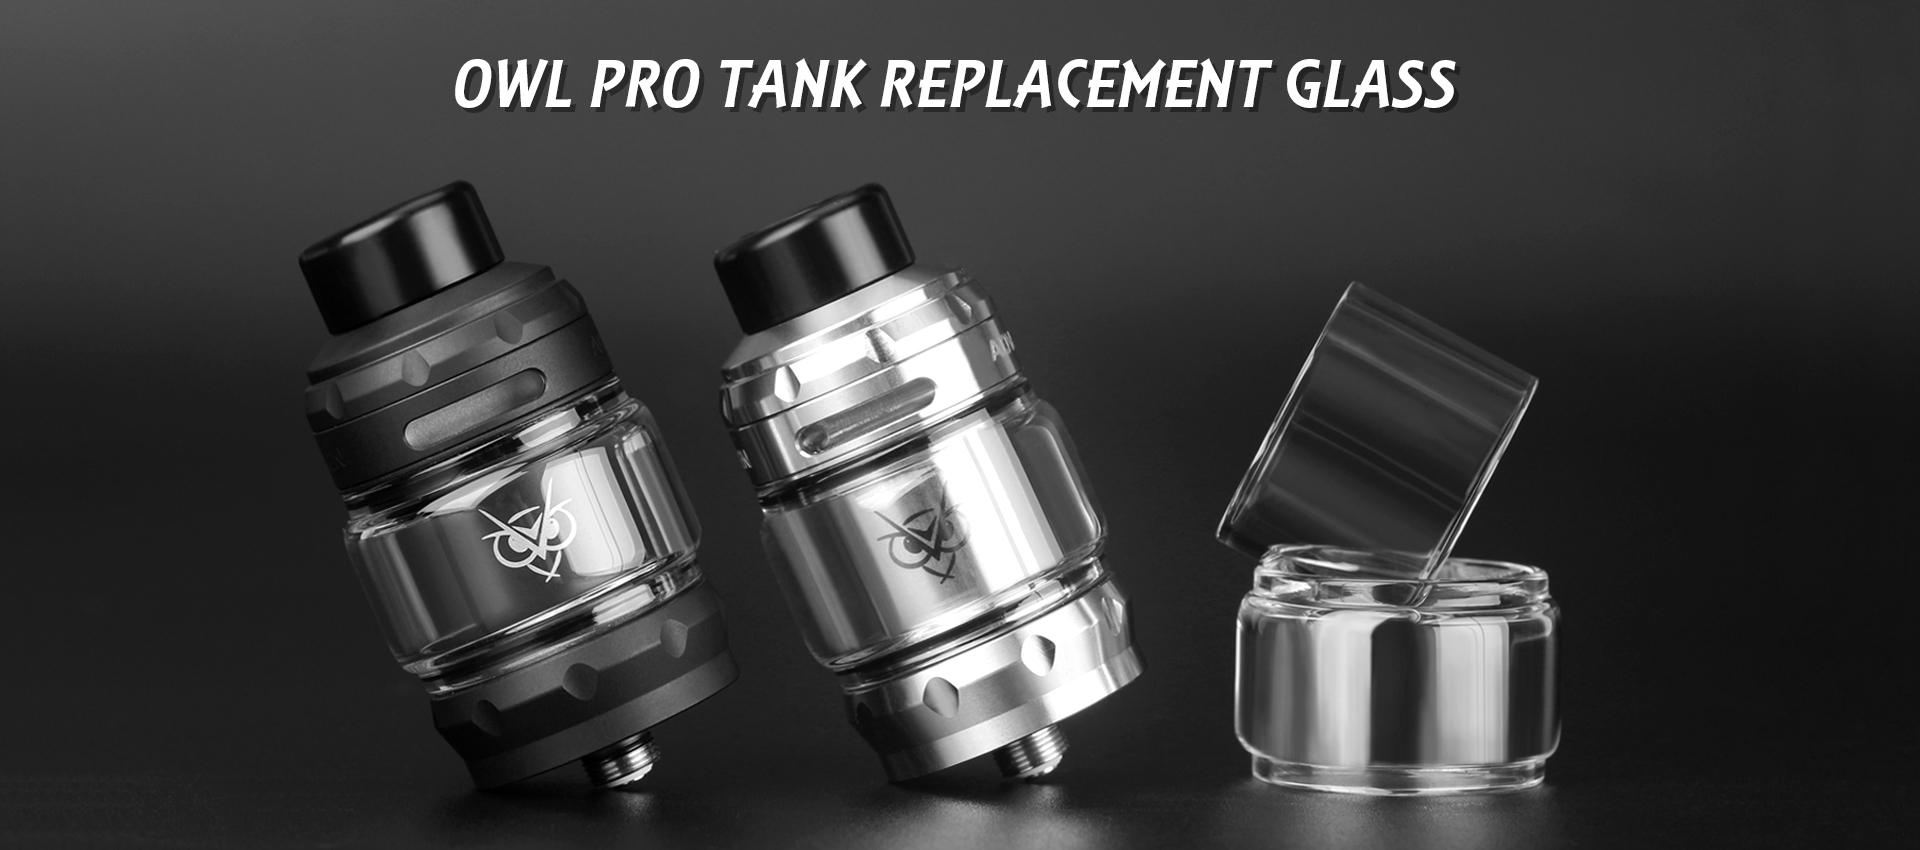 ADVKEN Owl Pro Tank Replacement Glass Tube